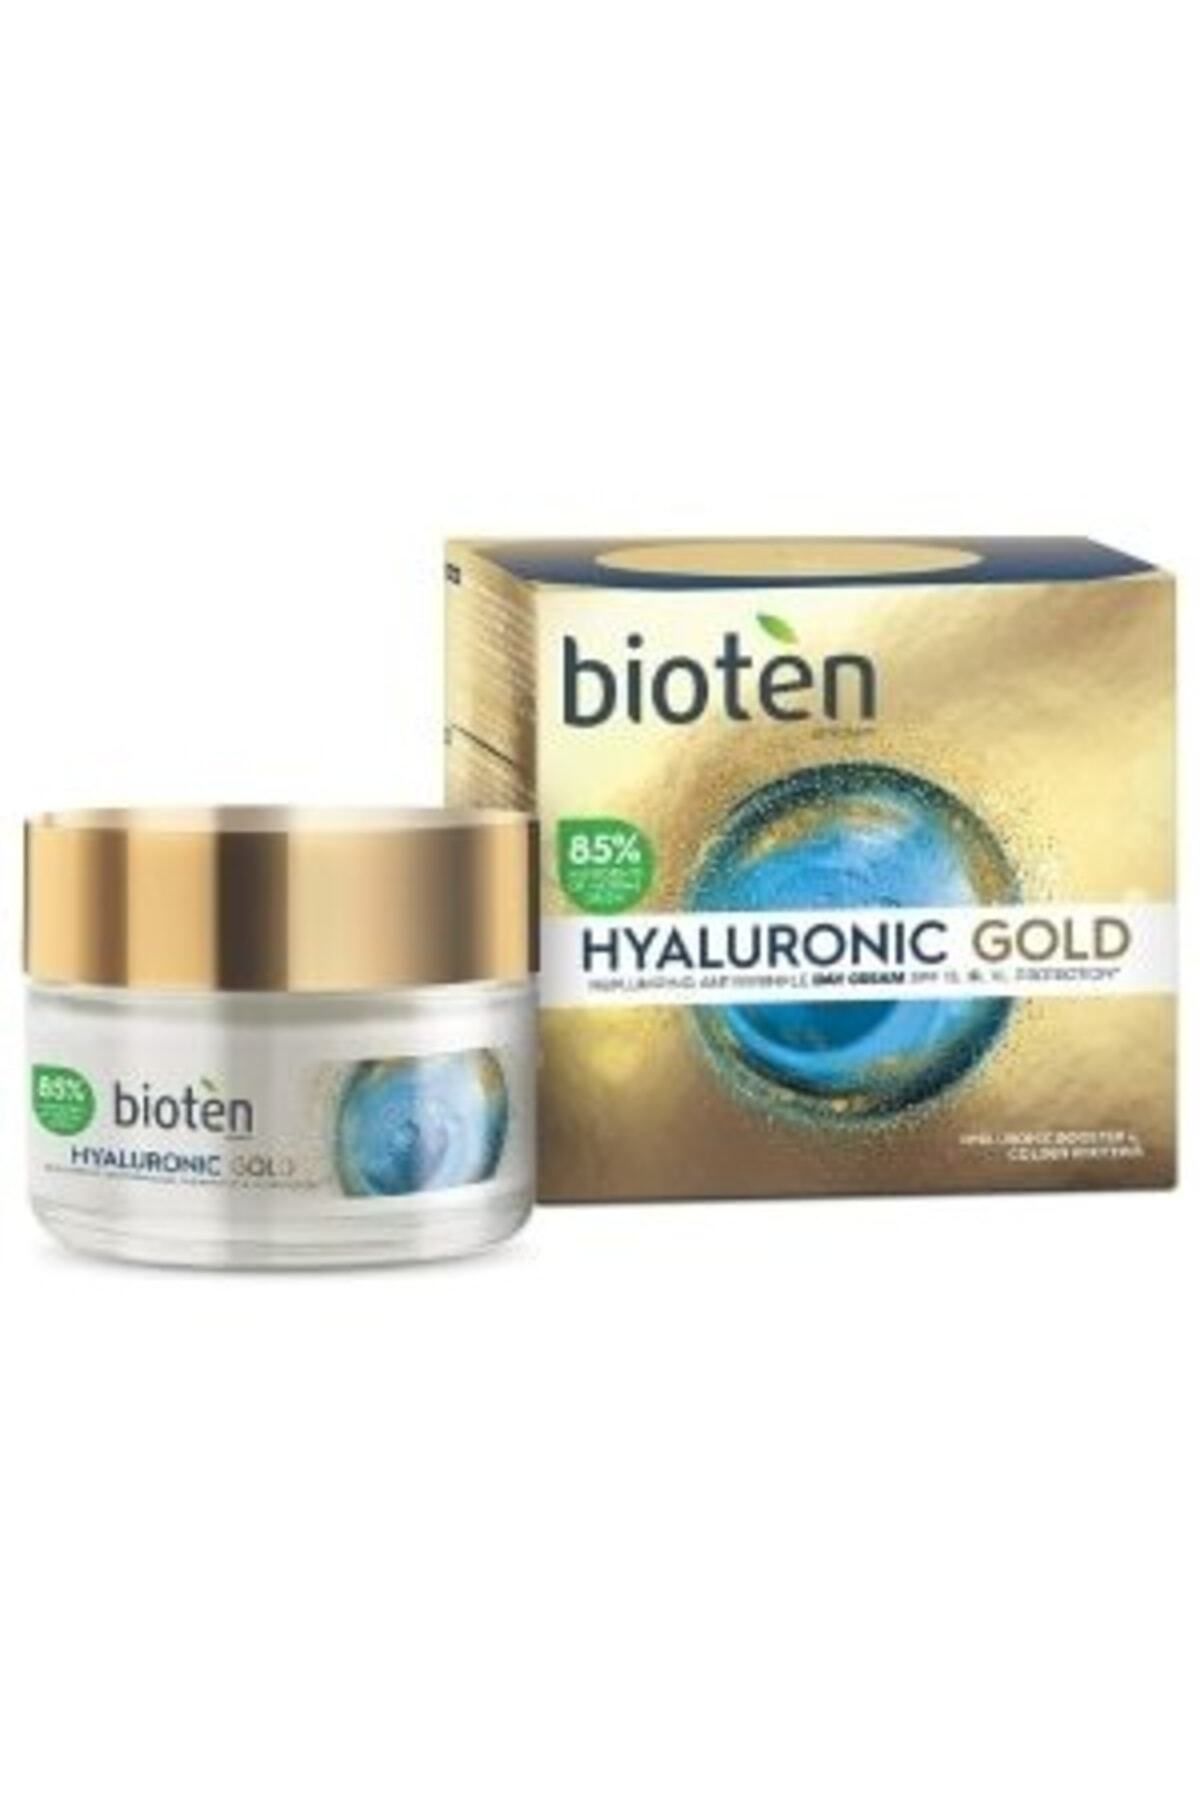 Bioten HYALURONİC GOLD ANTİ-DARK CİRCLE DAY CREAM SPF10 50 ML DKHAİR744